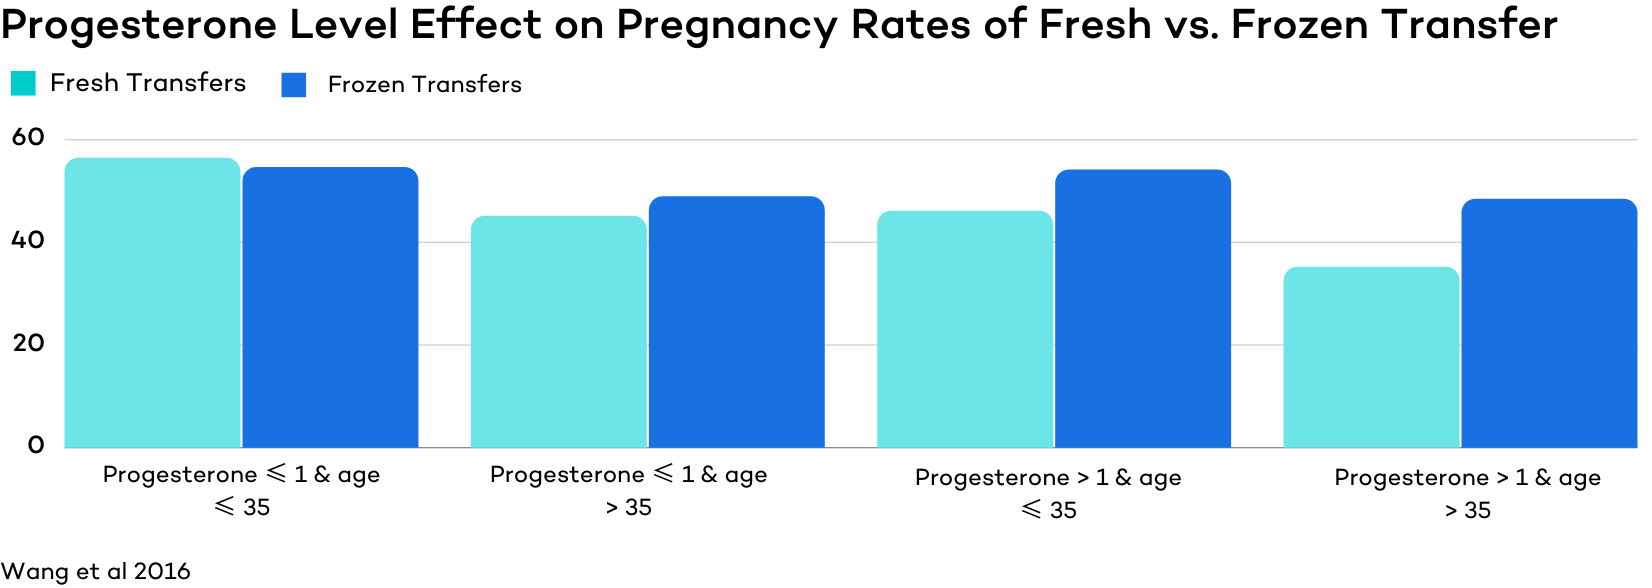 Progesterone Level Effect on Pregnancy Rates of Fresh vs. Frozen Transfer